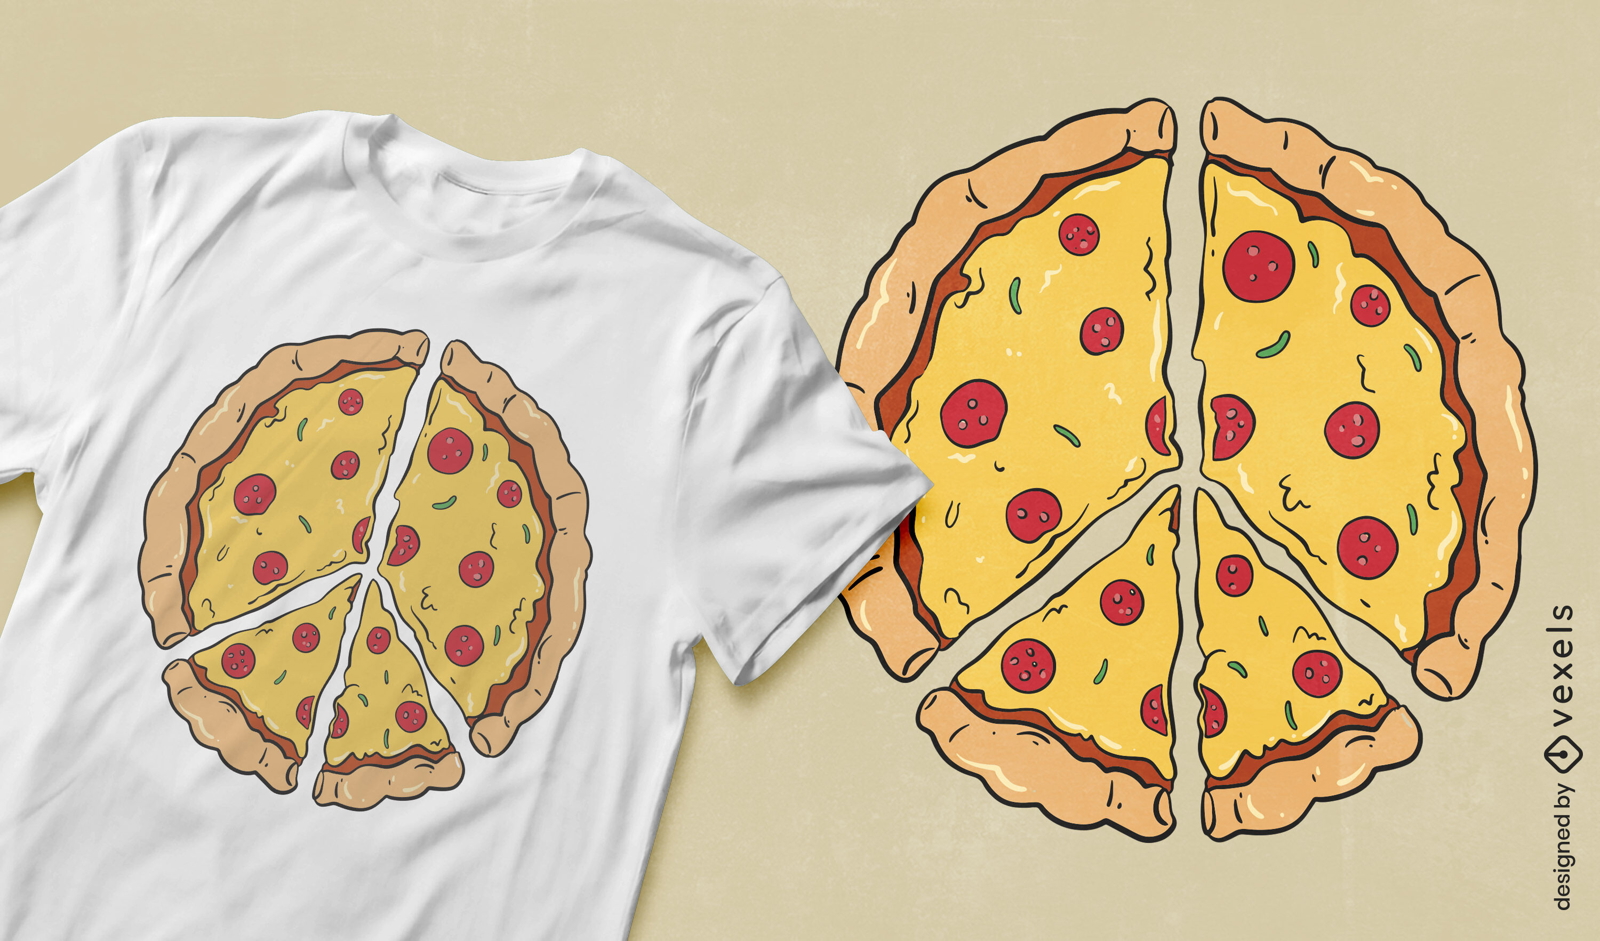 Diseño de camiseta de pizza de paz.